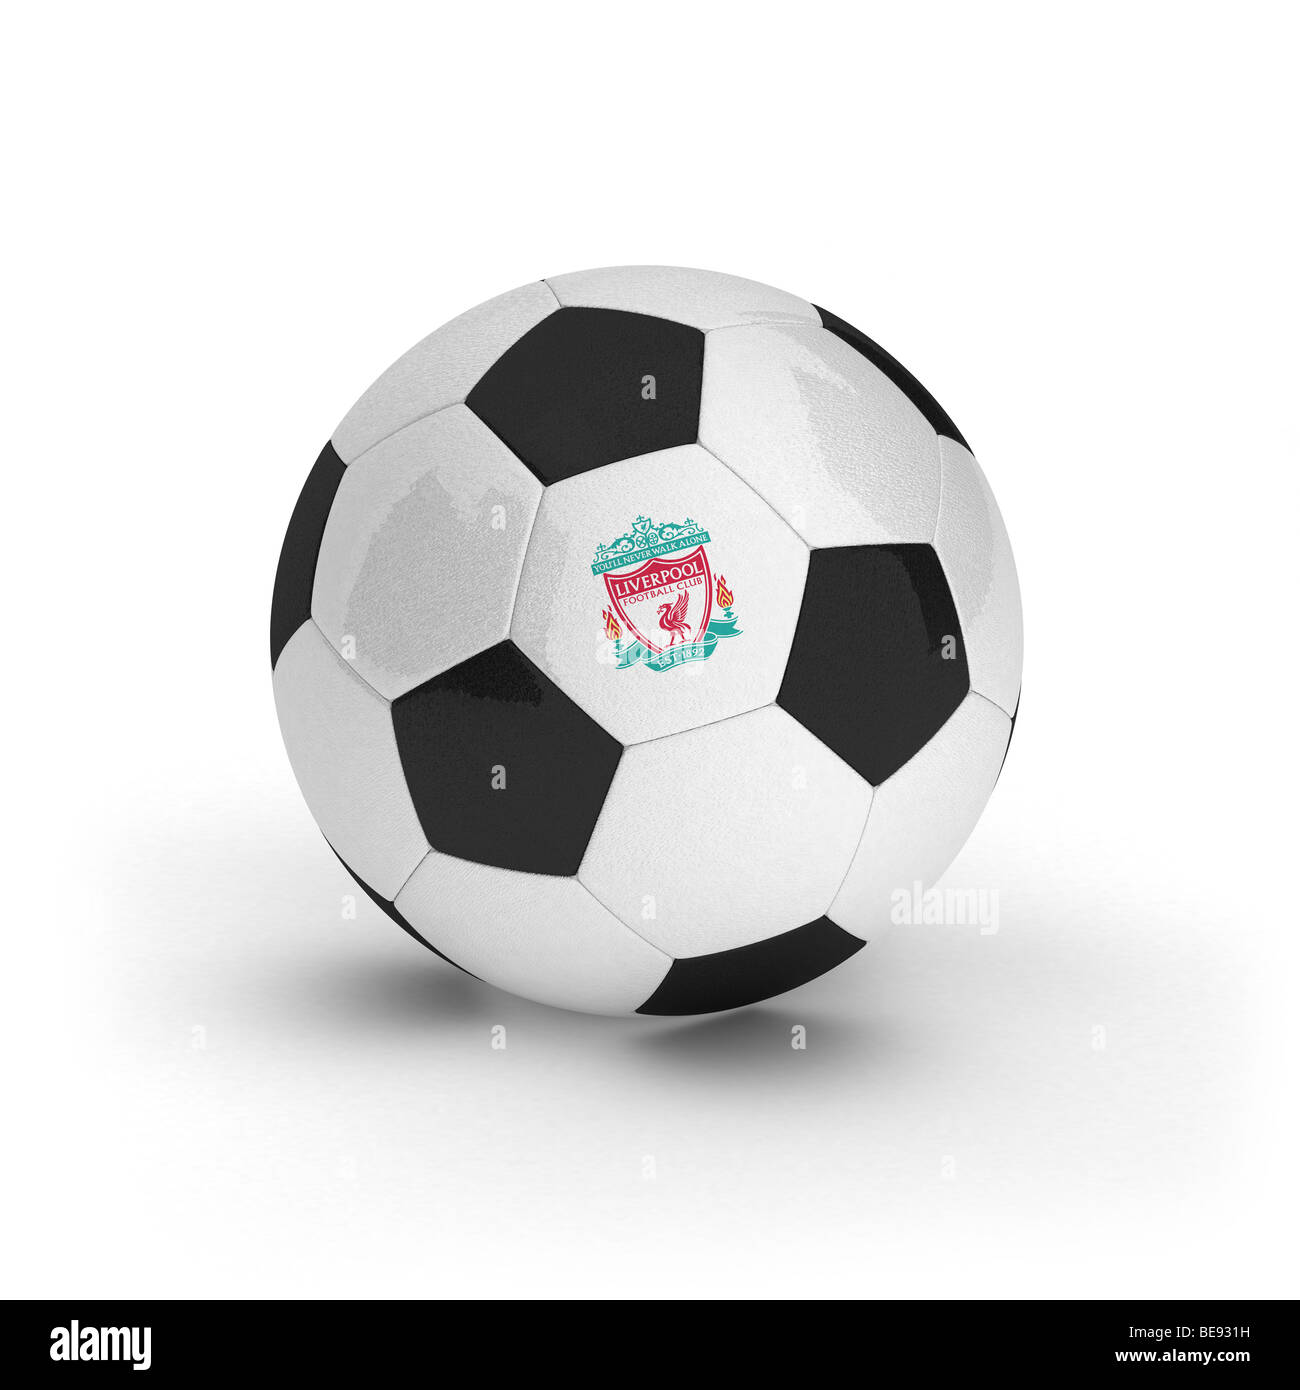 Liverpool Football Club emblem on a football Stock Photo